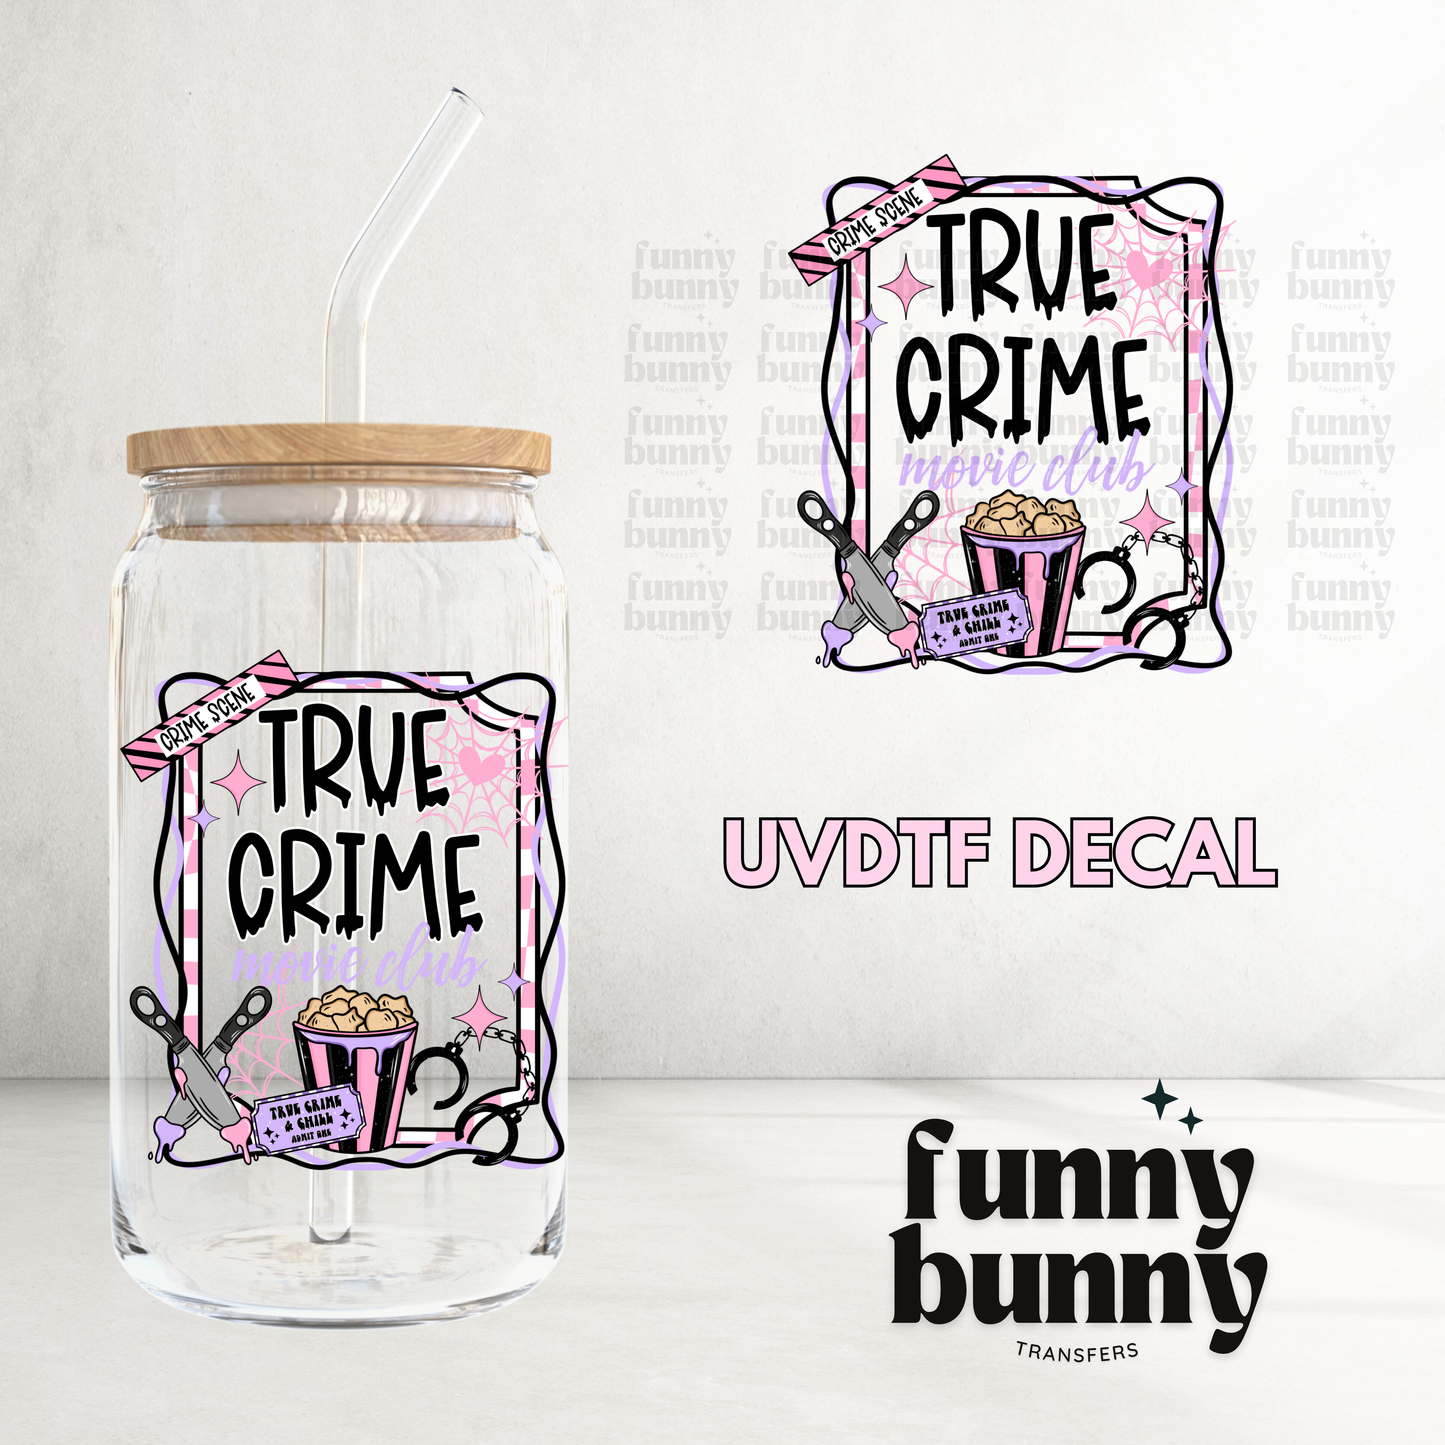 True Crime Movie Club - UVDTF Decal